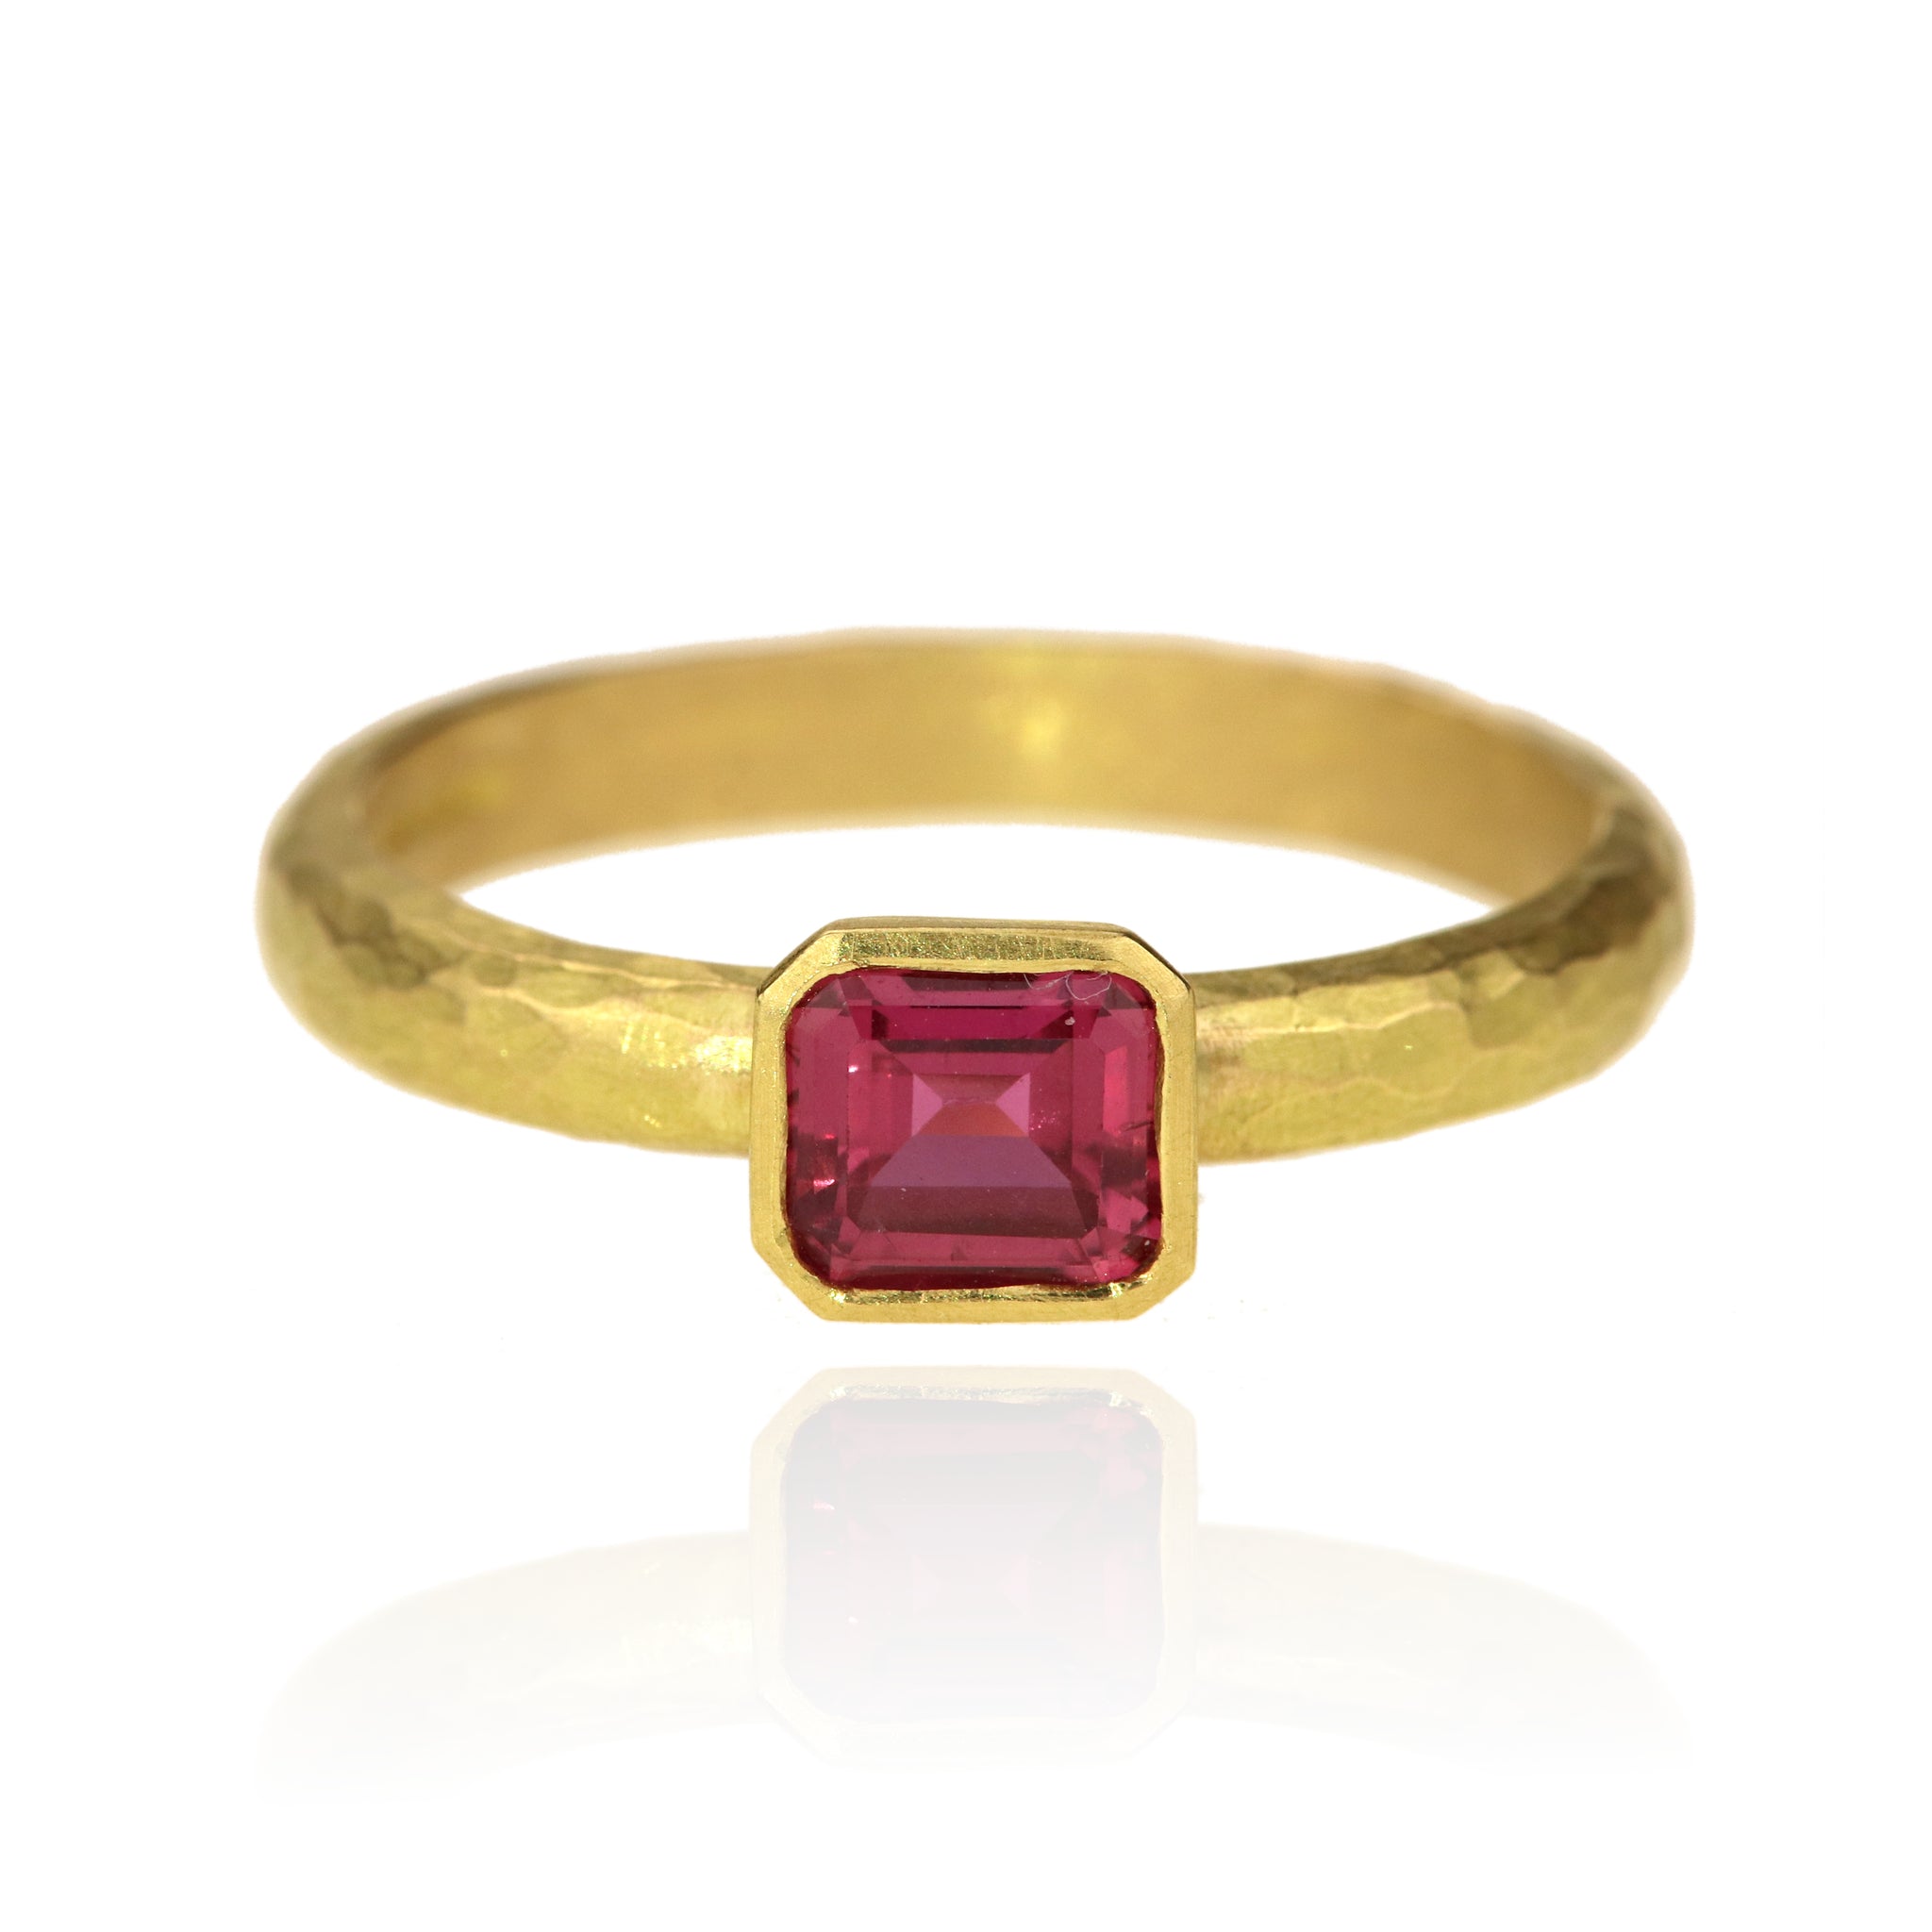 Vivid Pink Emerald Cut Sapphire Ring